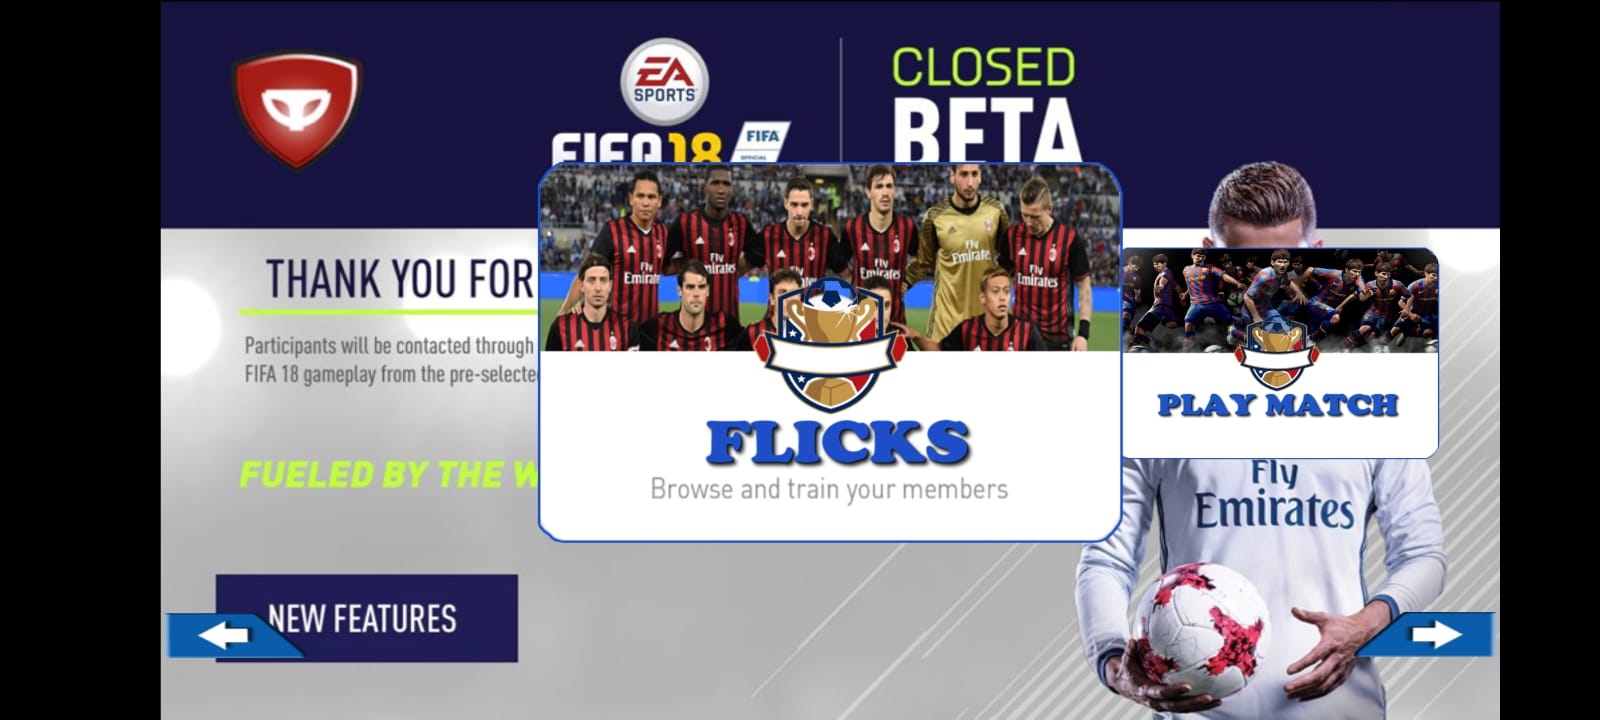 FIFA 18 Free Download